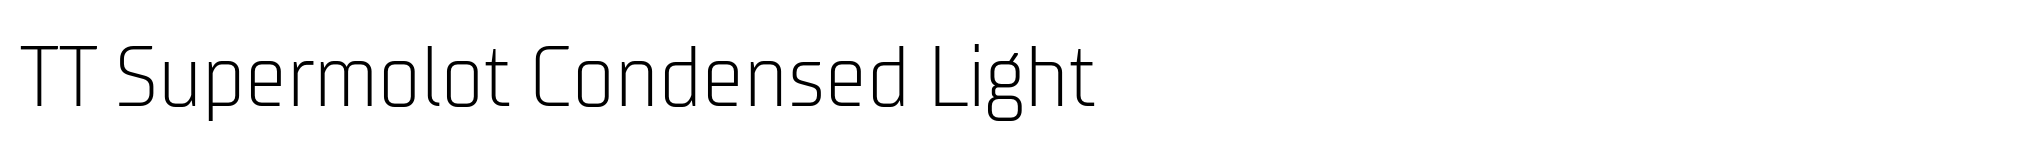 TT Supermolot Condensed Light image